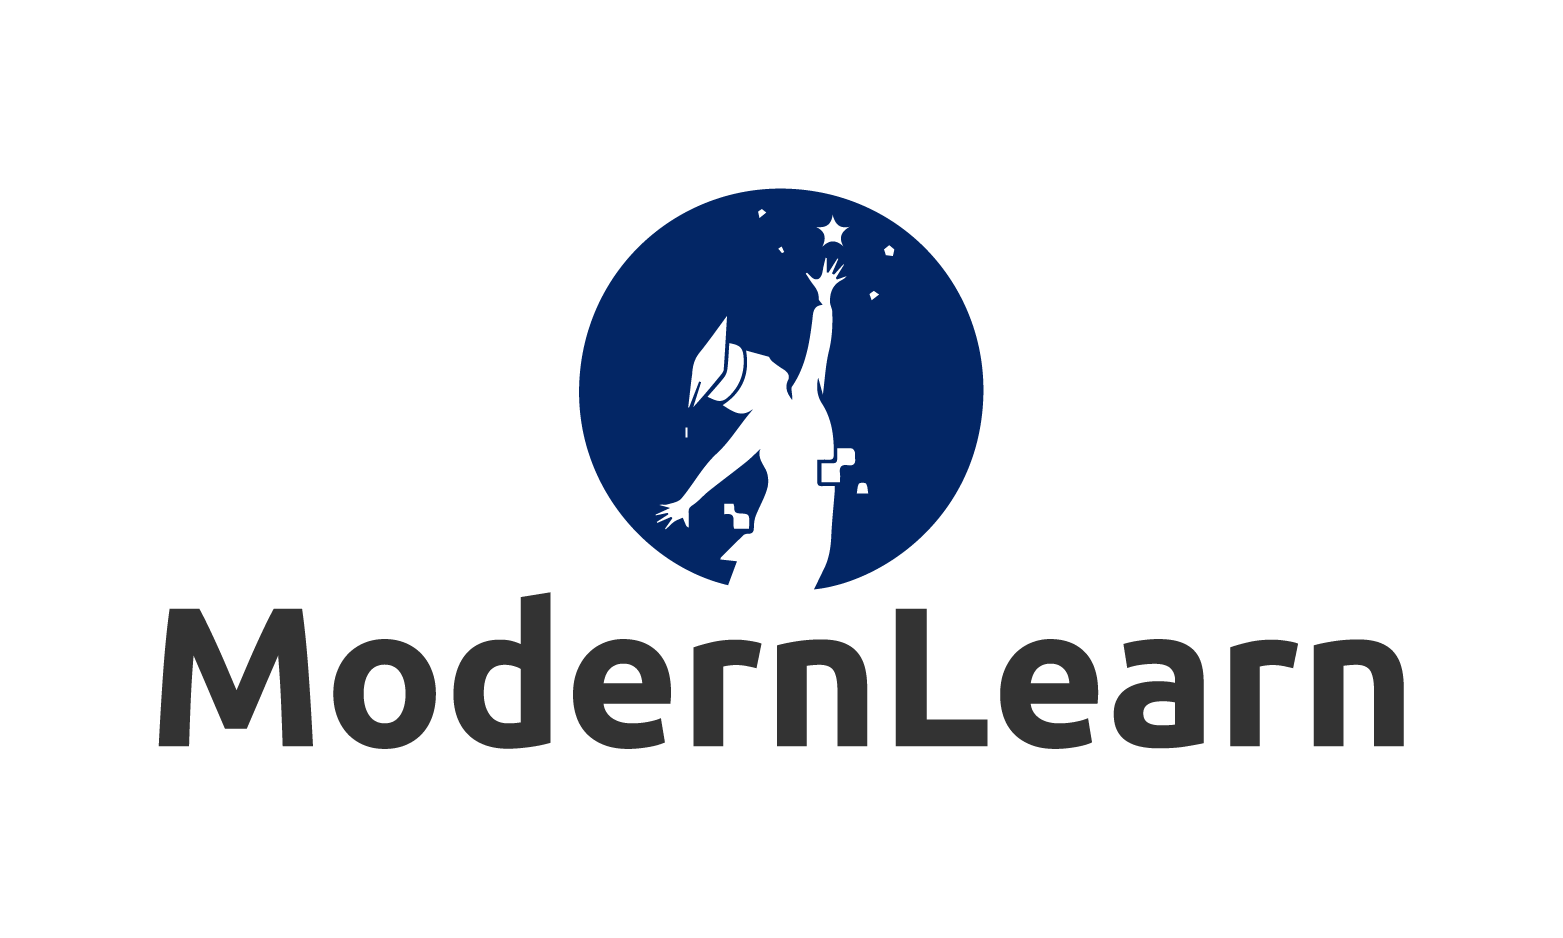 ModernLearn.com - Creative brandable domain for sale